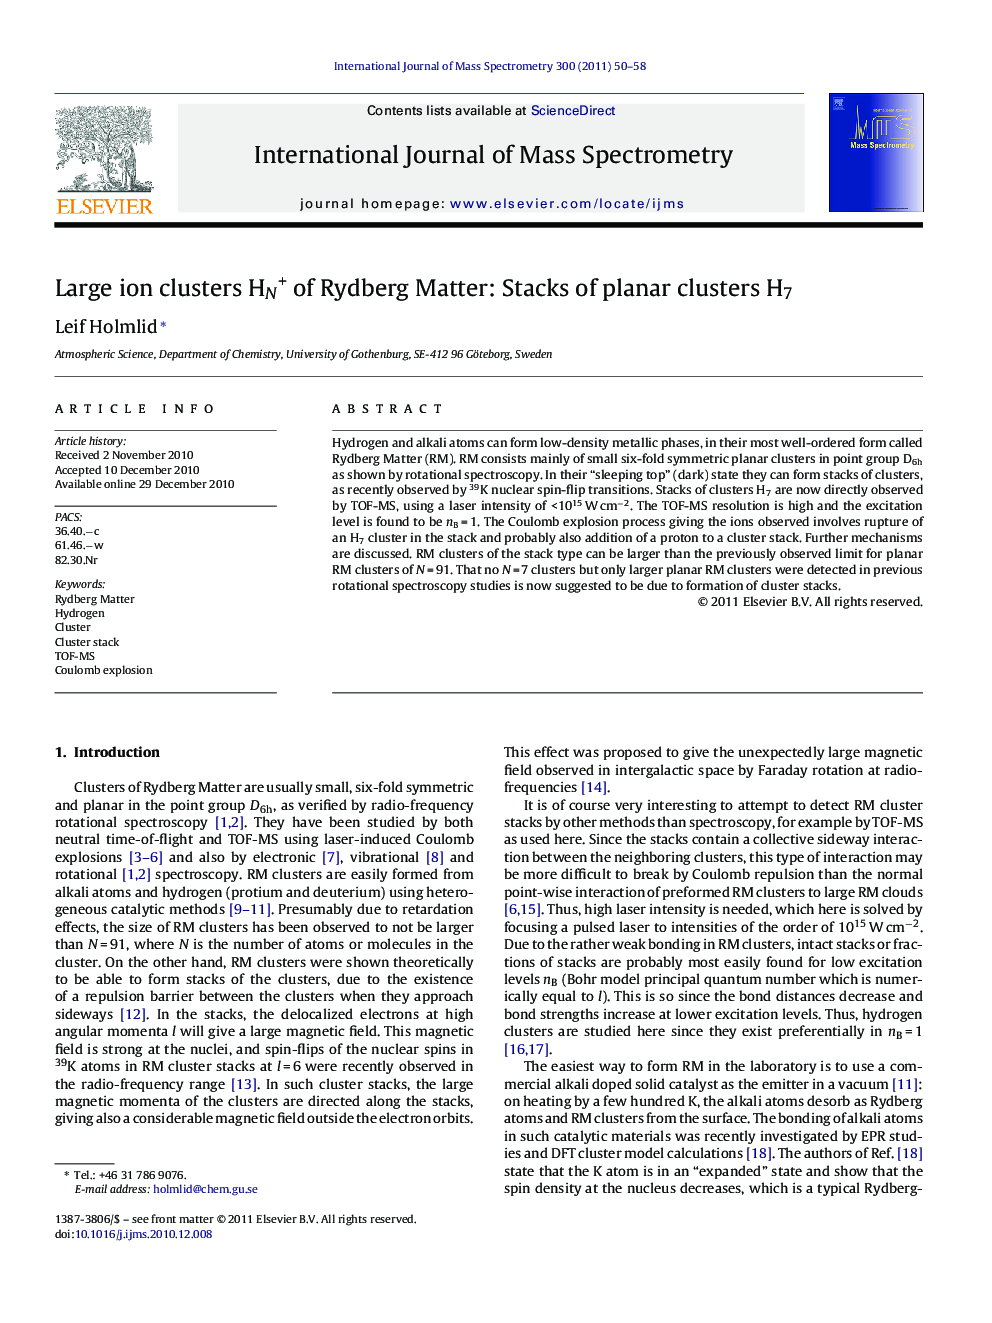 Large ion clusters HN+ of Rydberg Matter: Stacks of planar clusters H7